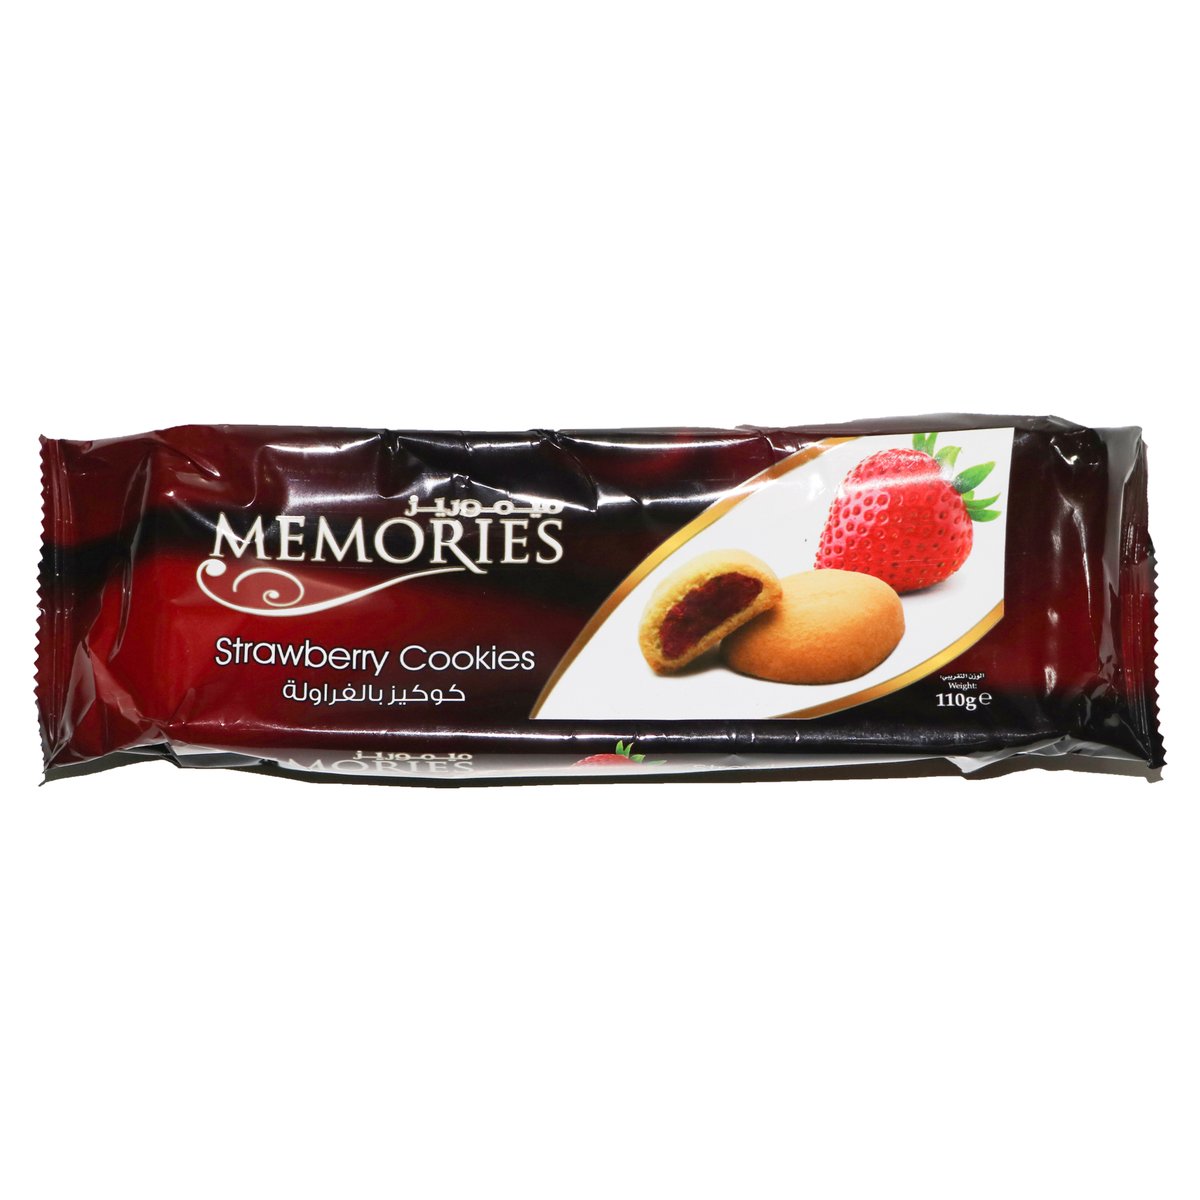 Memories Strawberry Cookies 110g